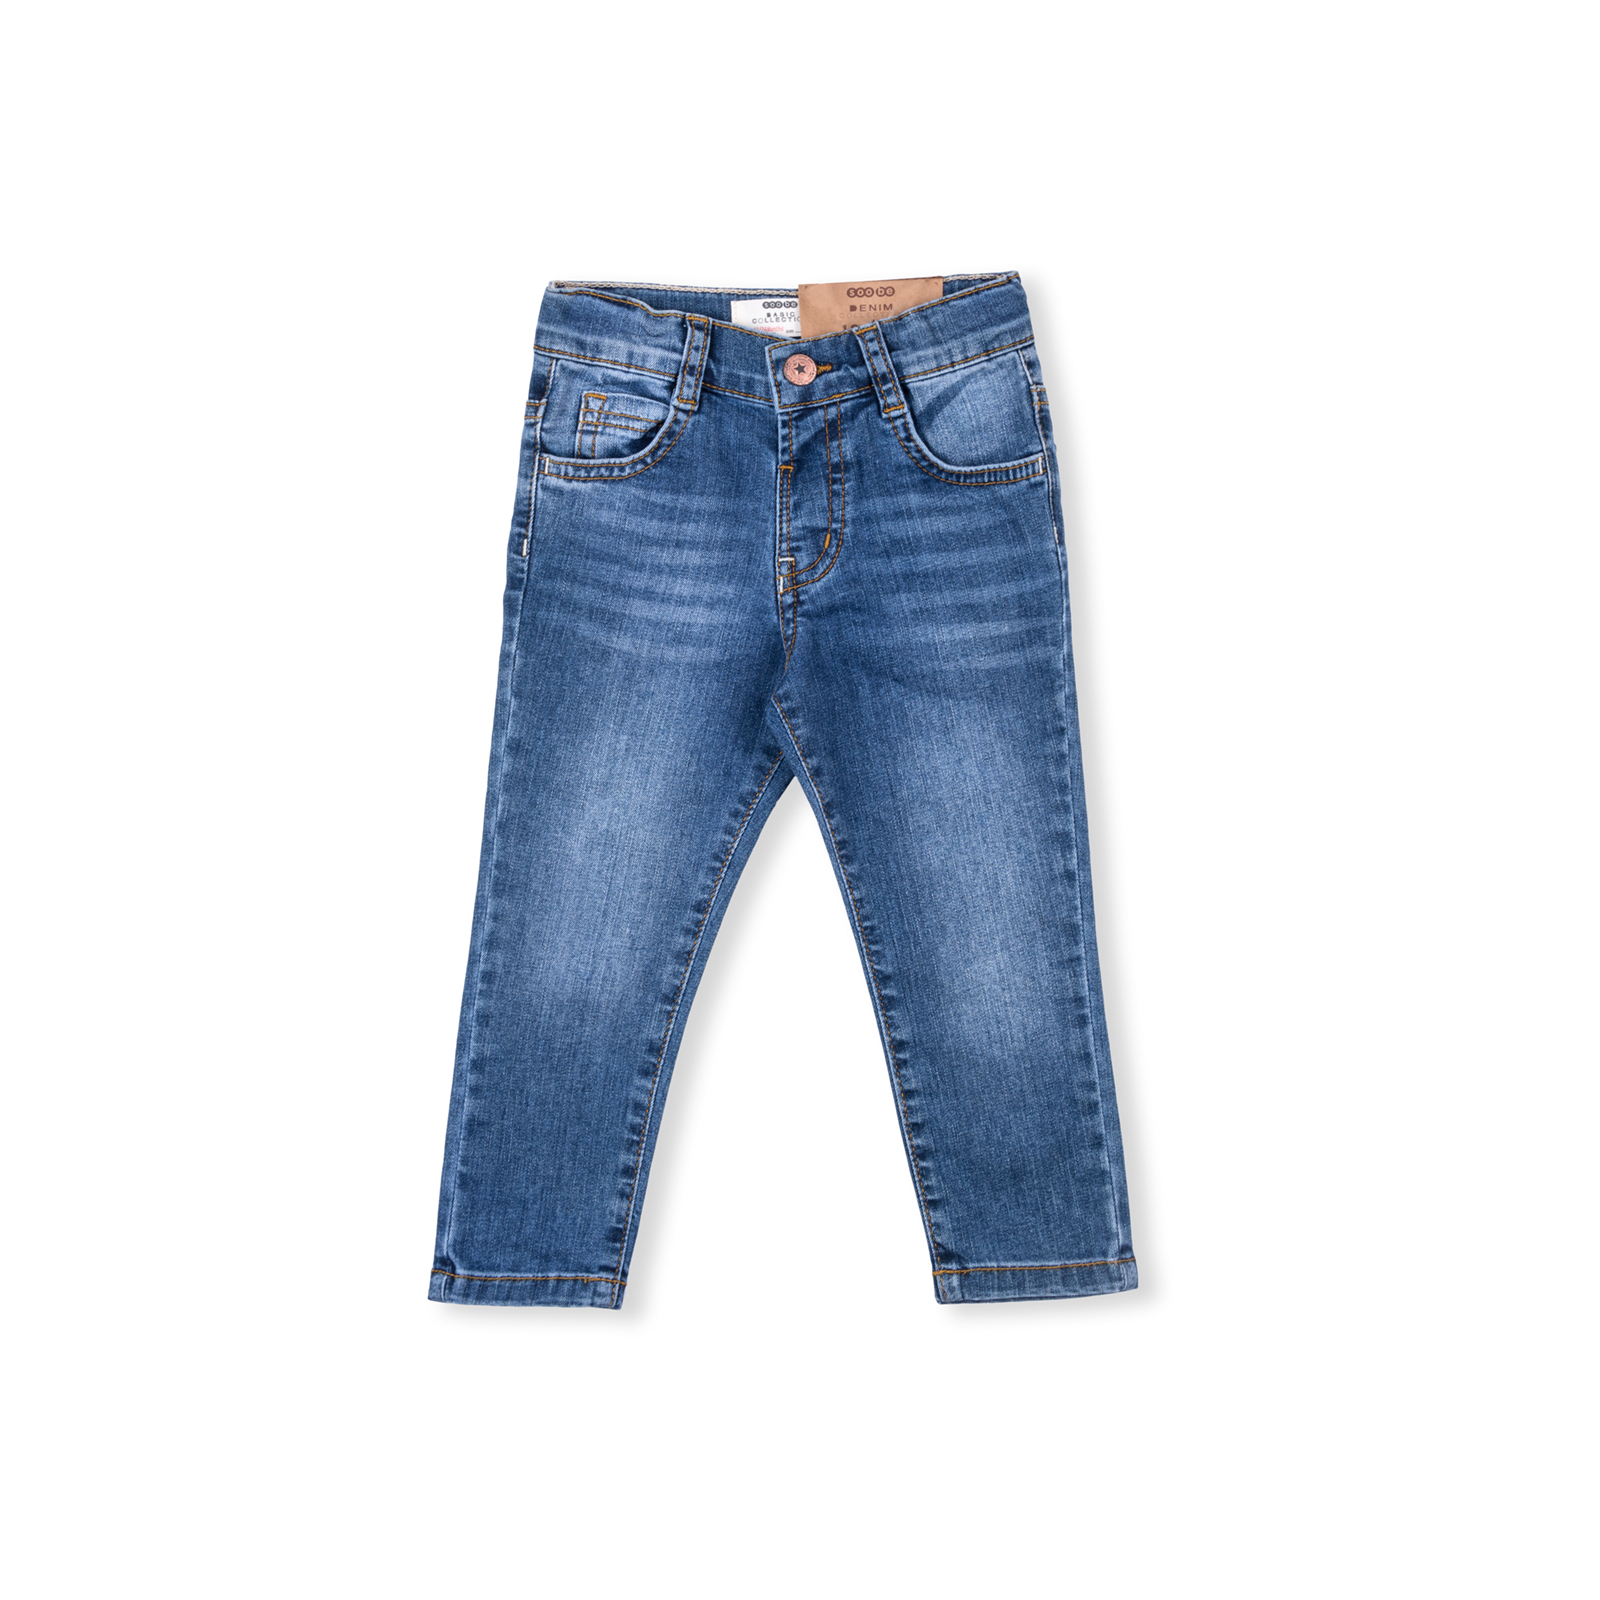 Джинсы Breeze синие (15YECPAN371-86B-jeans)